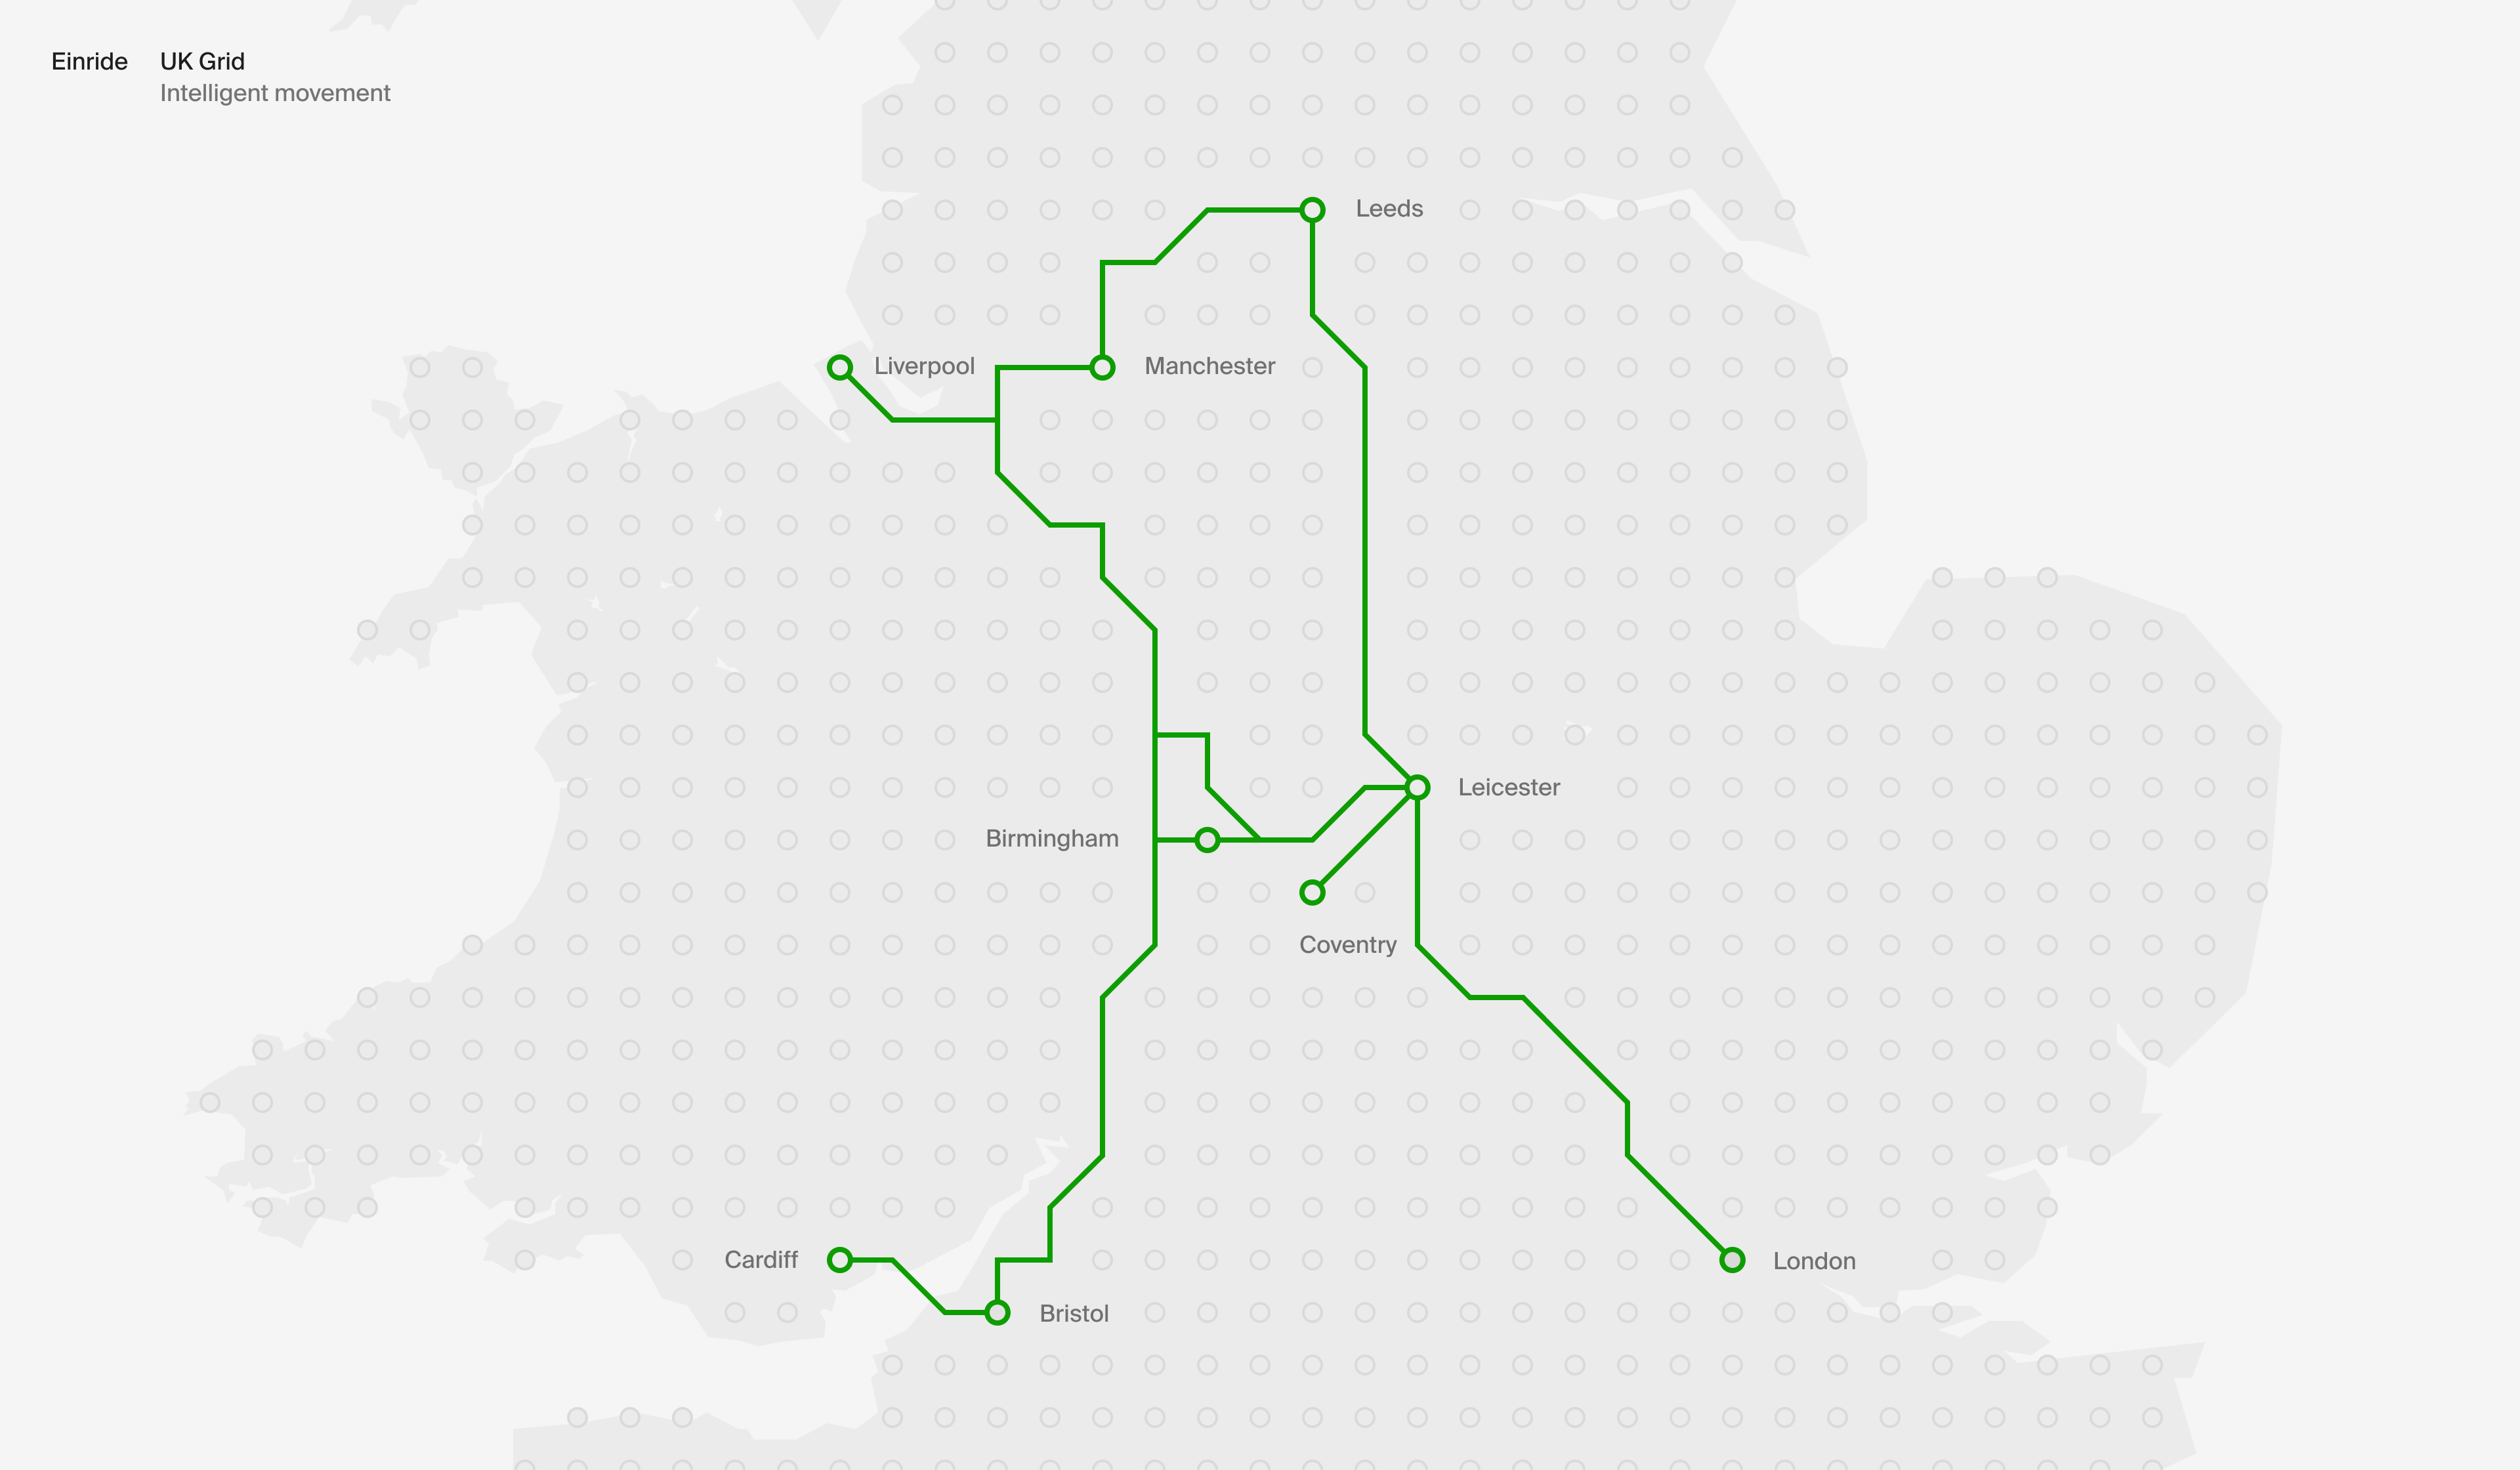 Einride's proposed transport network grid